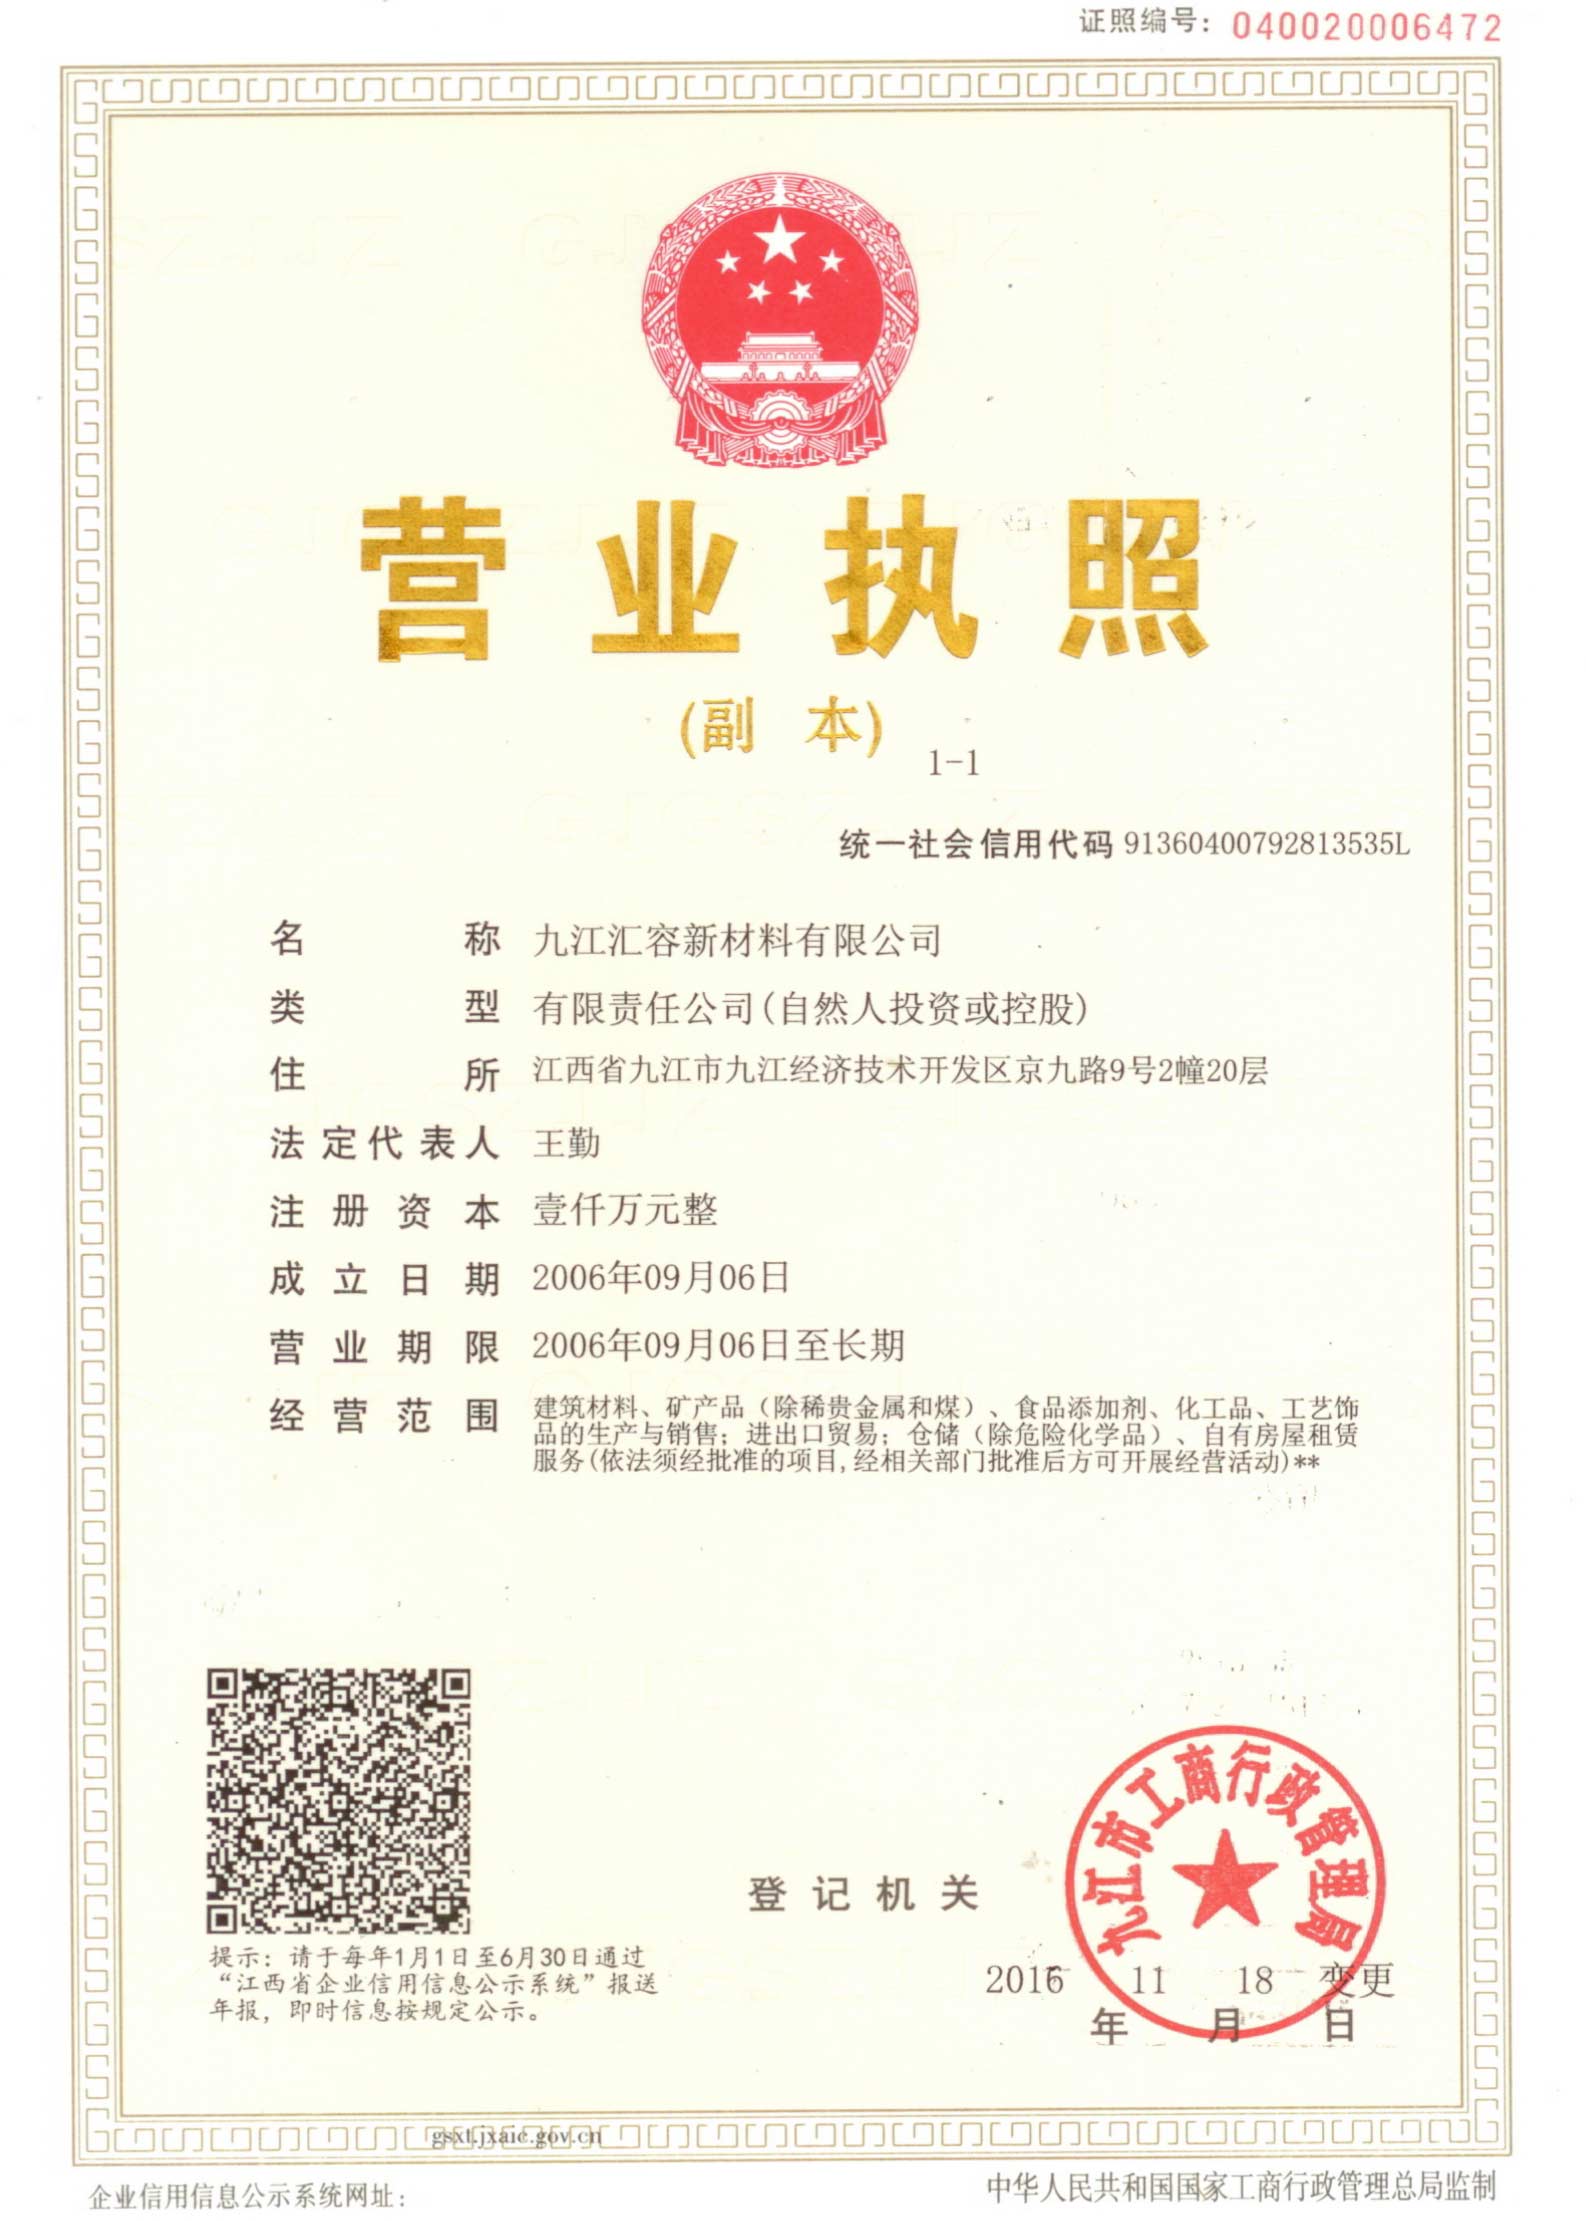 qualification-certificate-3